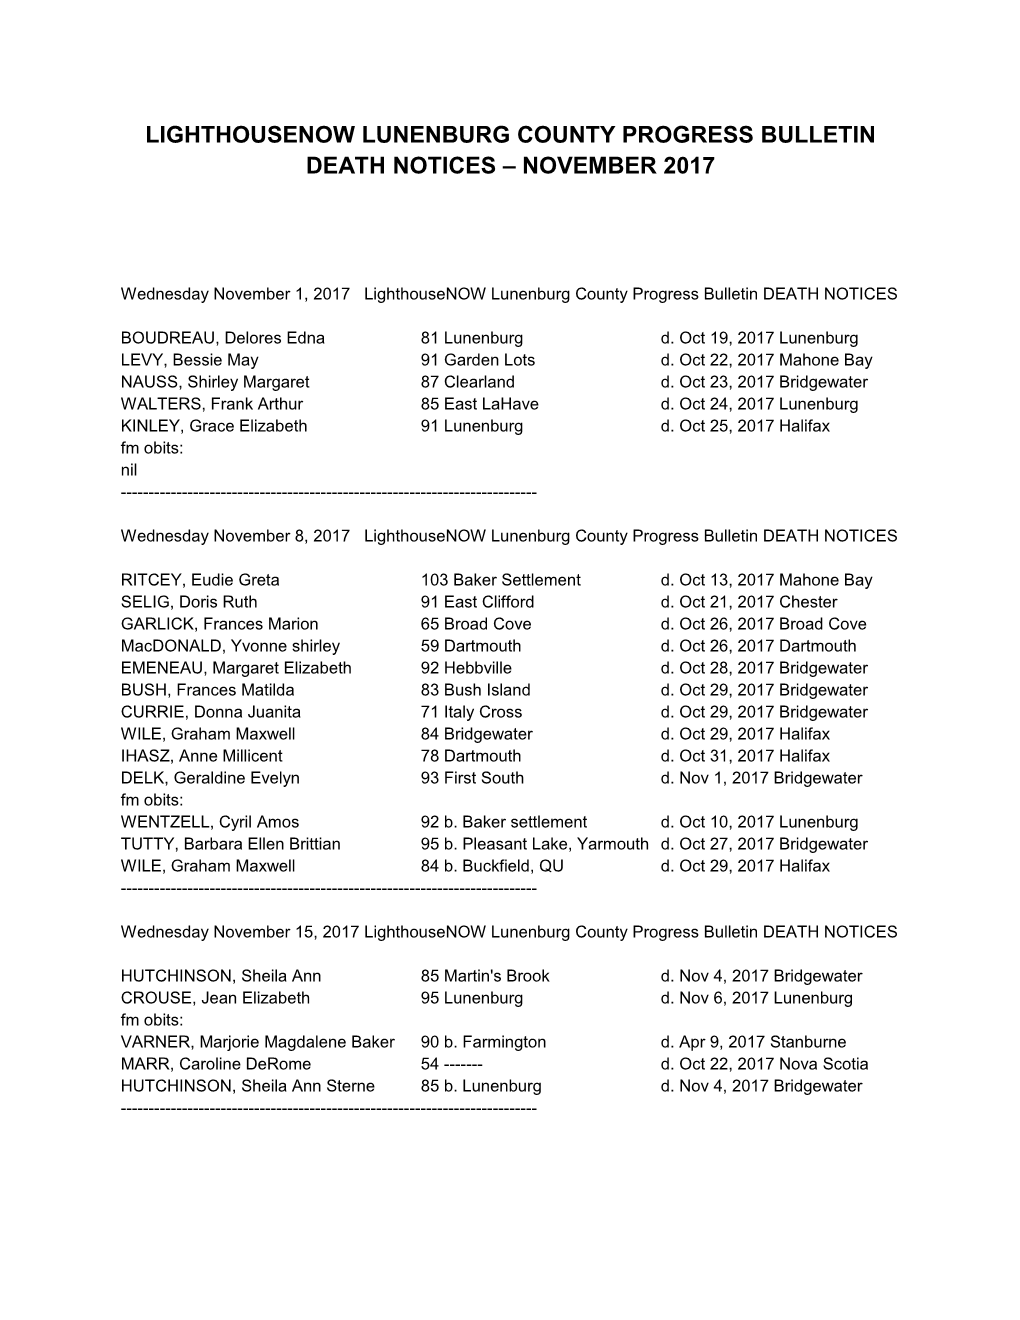 Lighthousenow Lunenburg County Progress Bulletin Death Notices November 2017